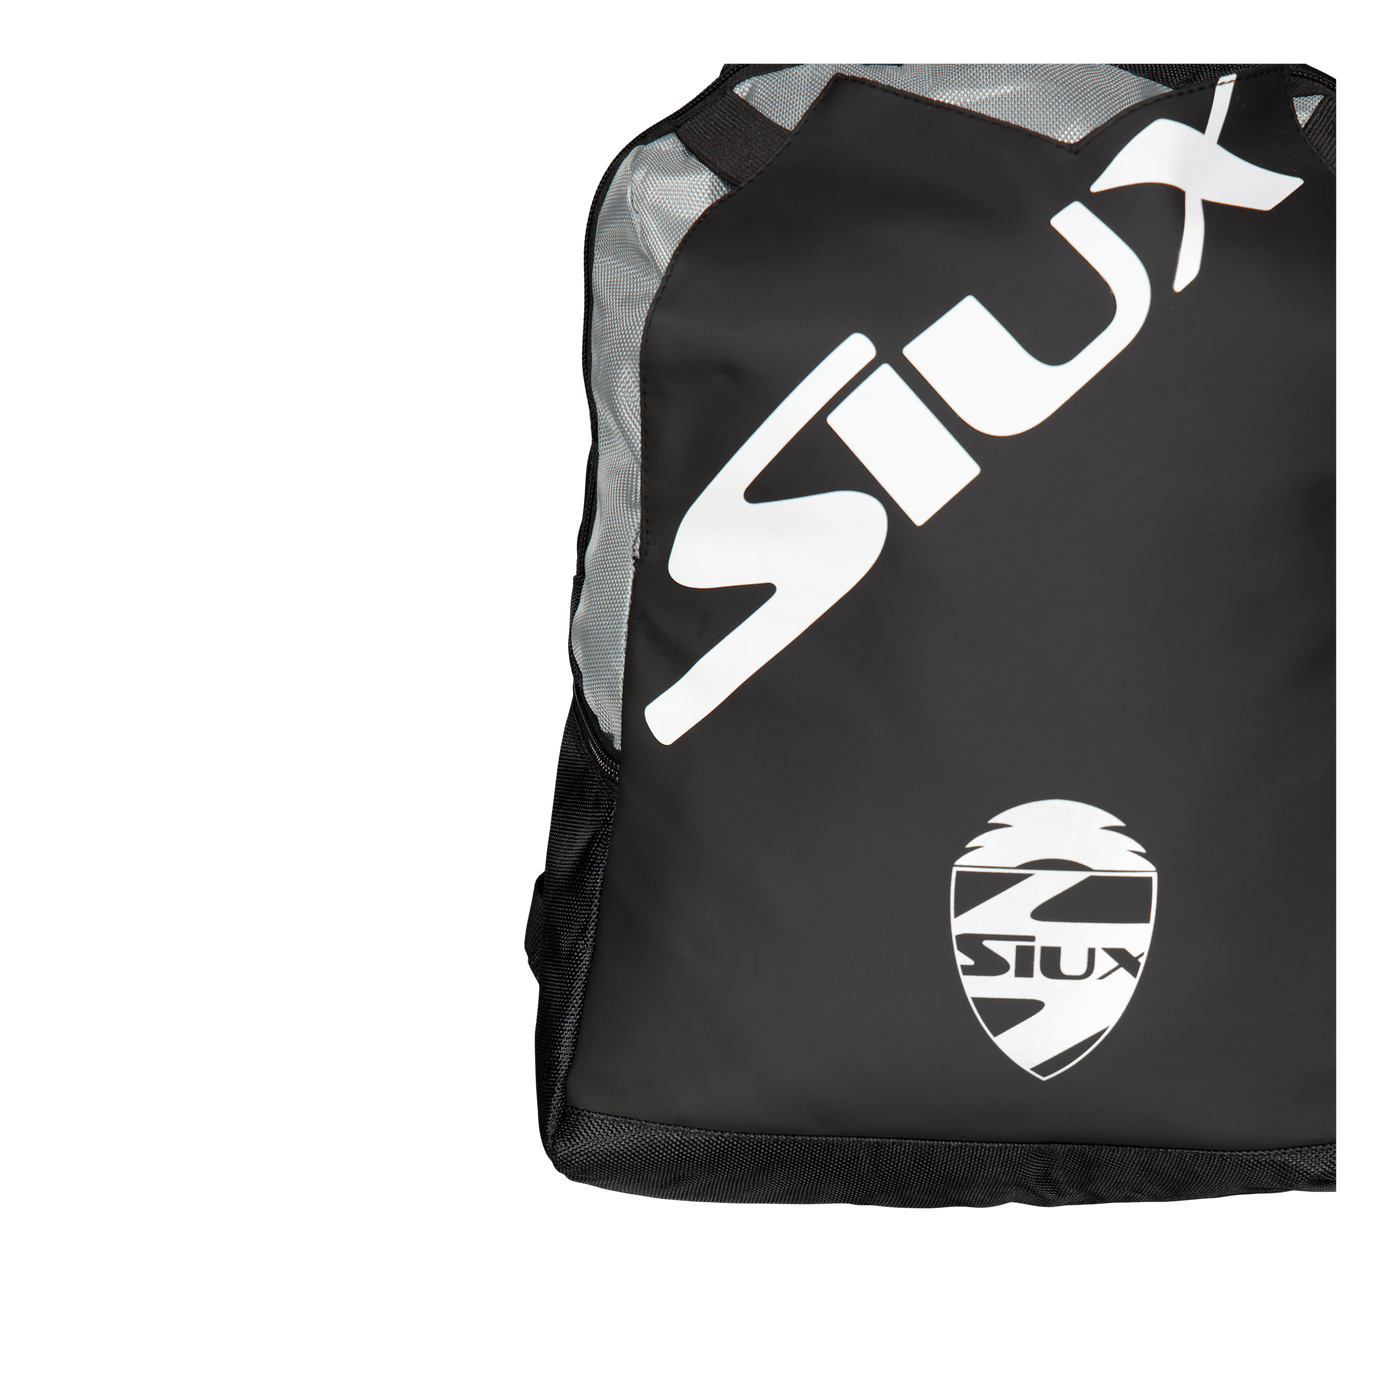 Silver Siux Mini Backpack